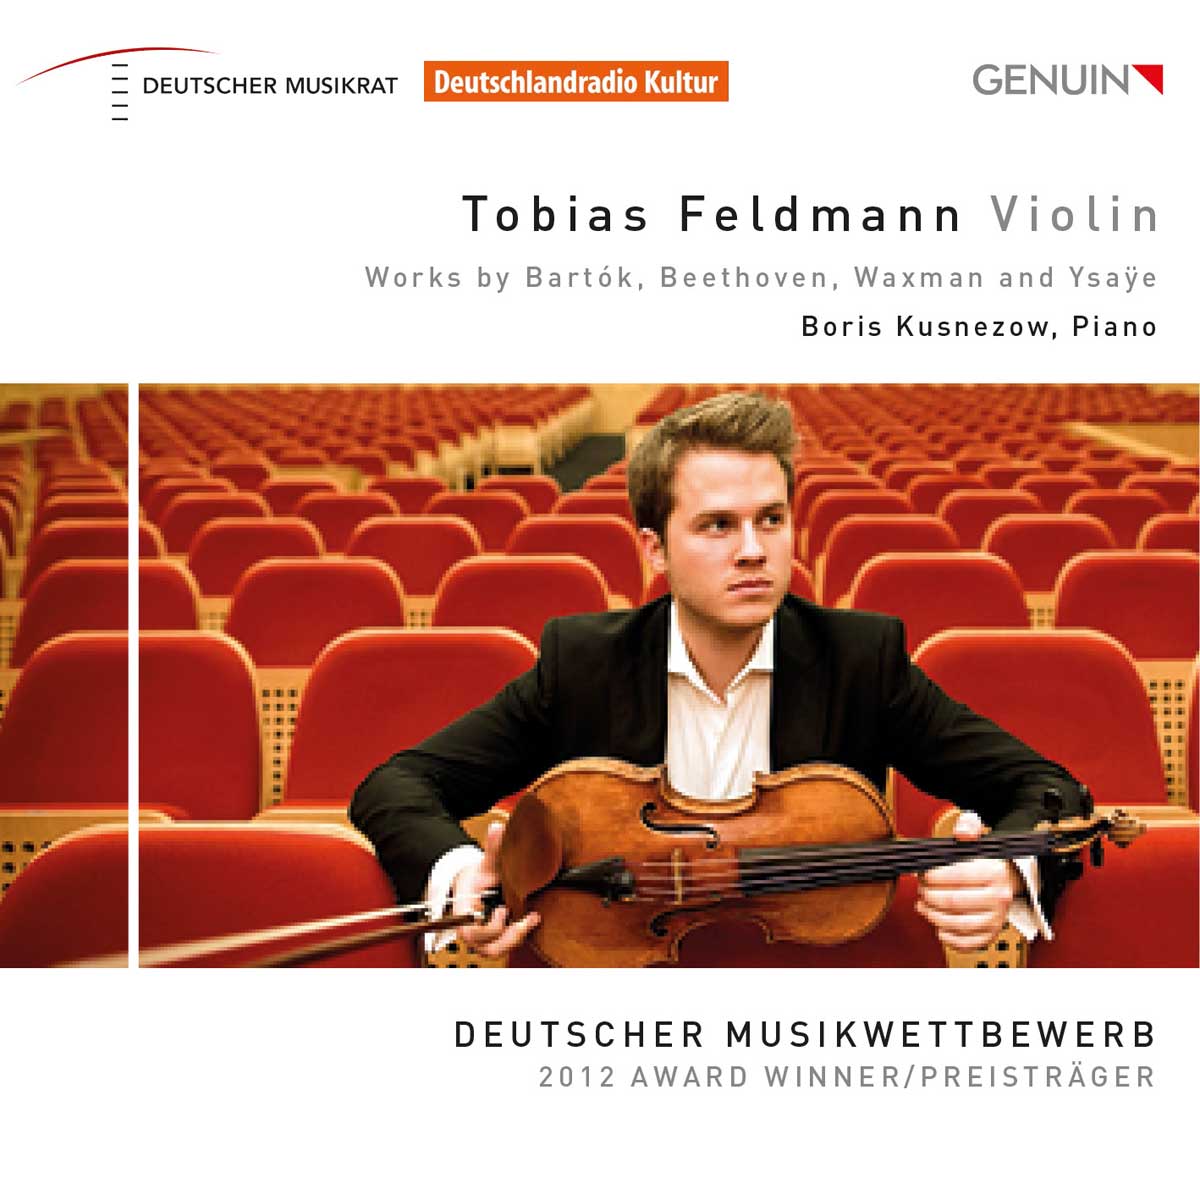 CD album cover 'Tobias Feldmann � Violine' (GEN 14316) with Tobias Feldmann, Boris Kusnezow